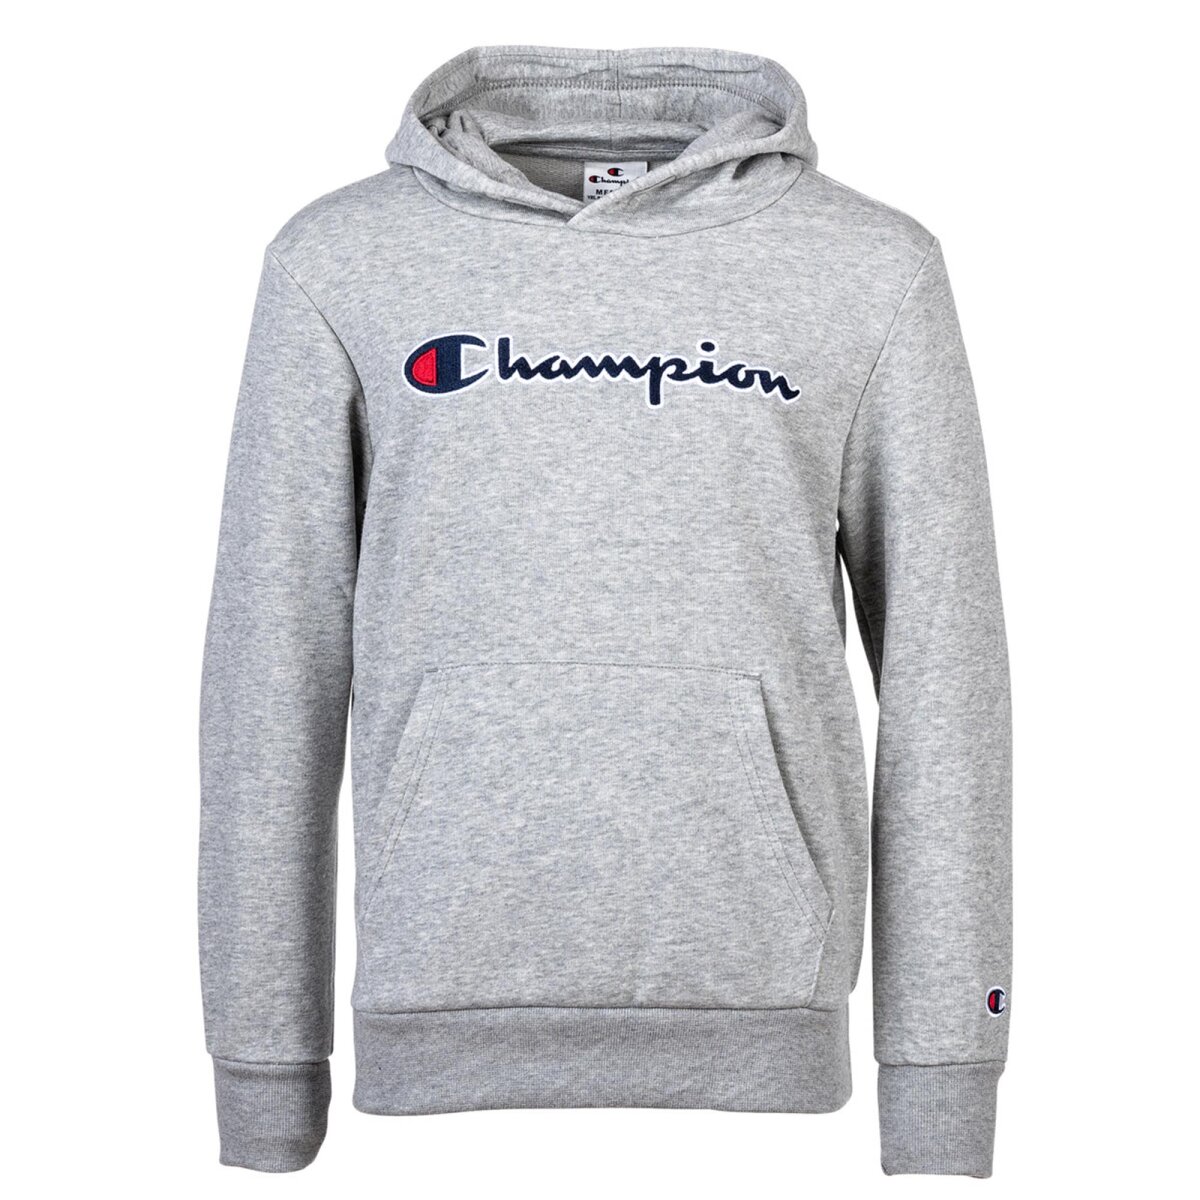 Sweater, Hoodie Champion Logo, - Unisex Cotton, So, Hood, Pocket, € Kids 47,95